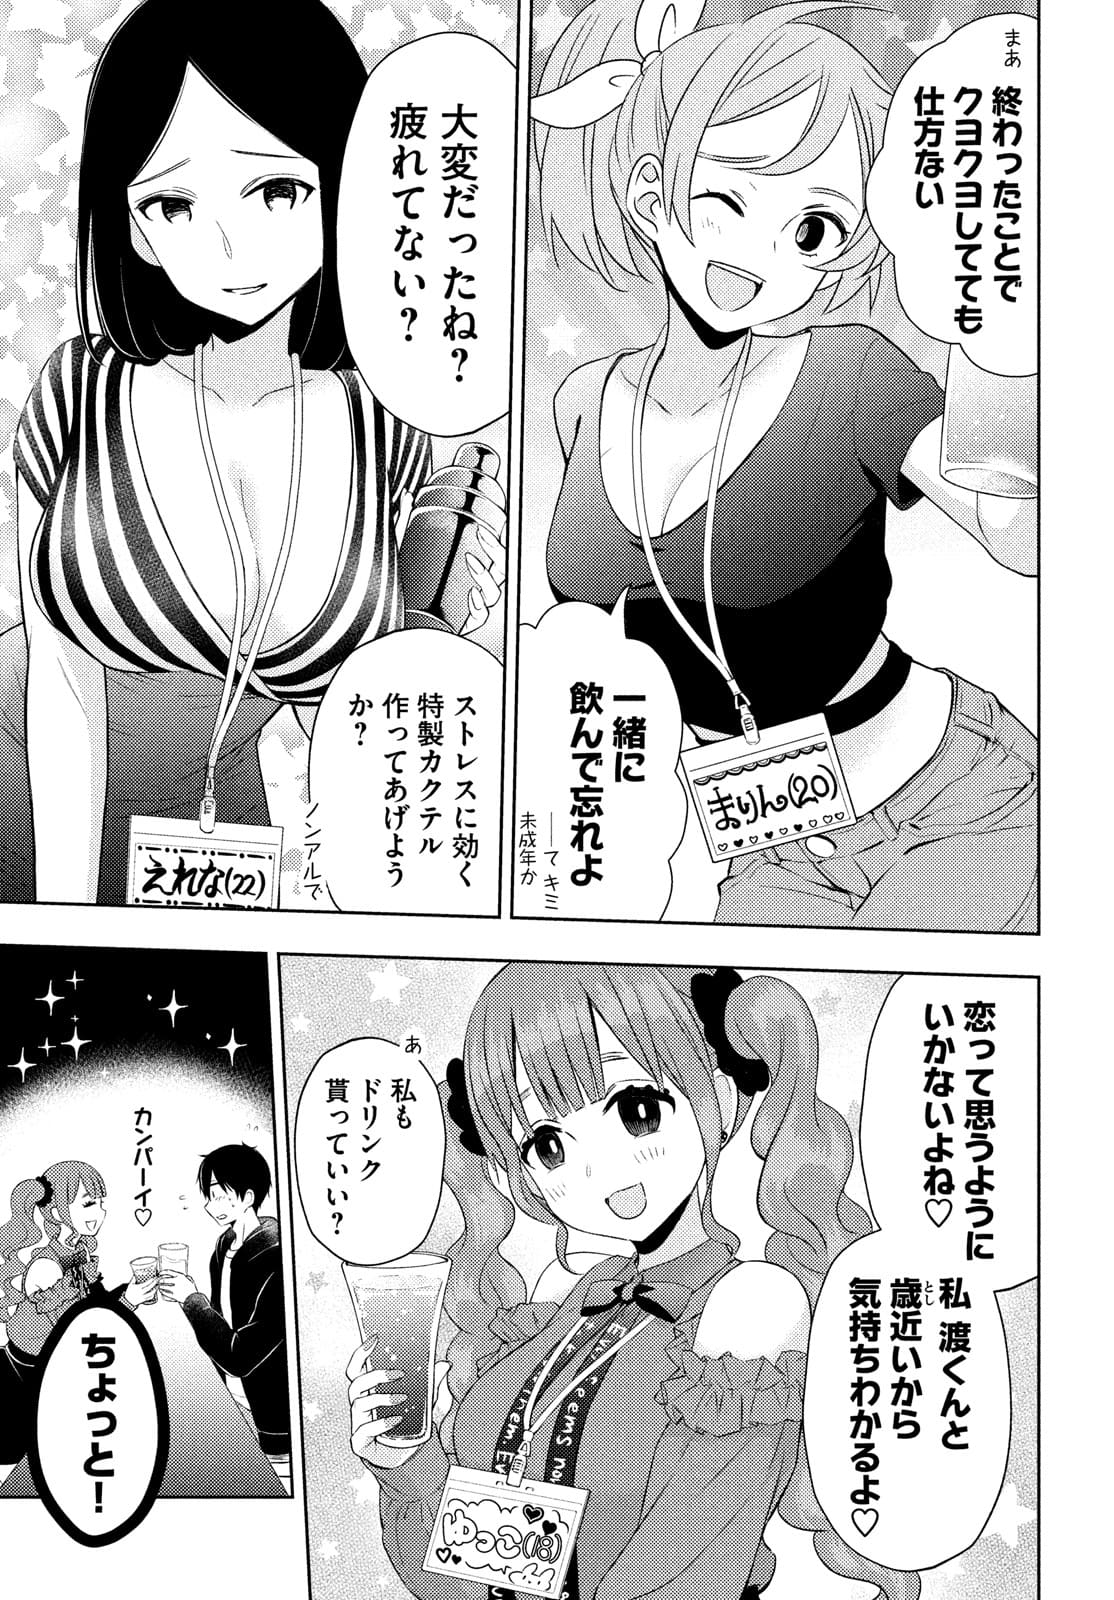 Watari-kun no xx ga Houkai Sunzen - Chapter 63 - Page 3